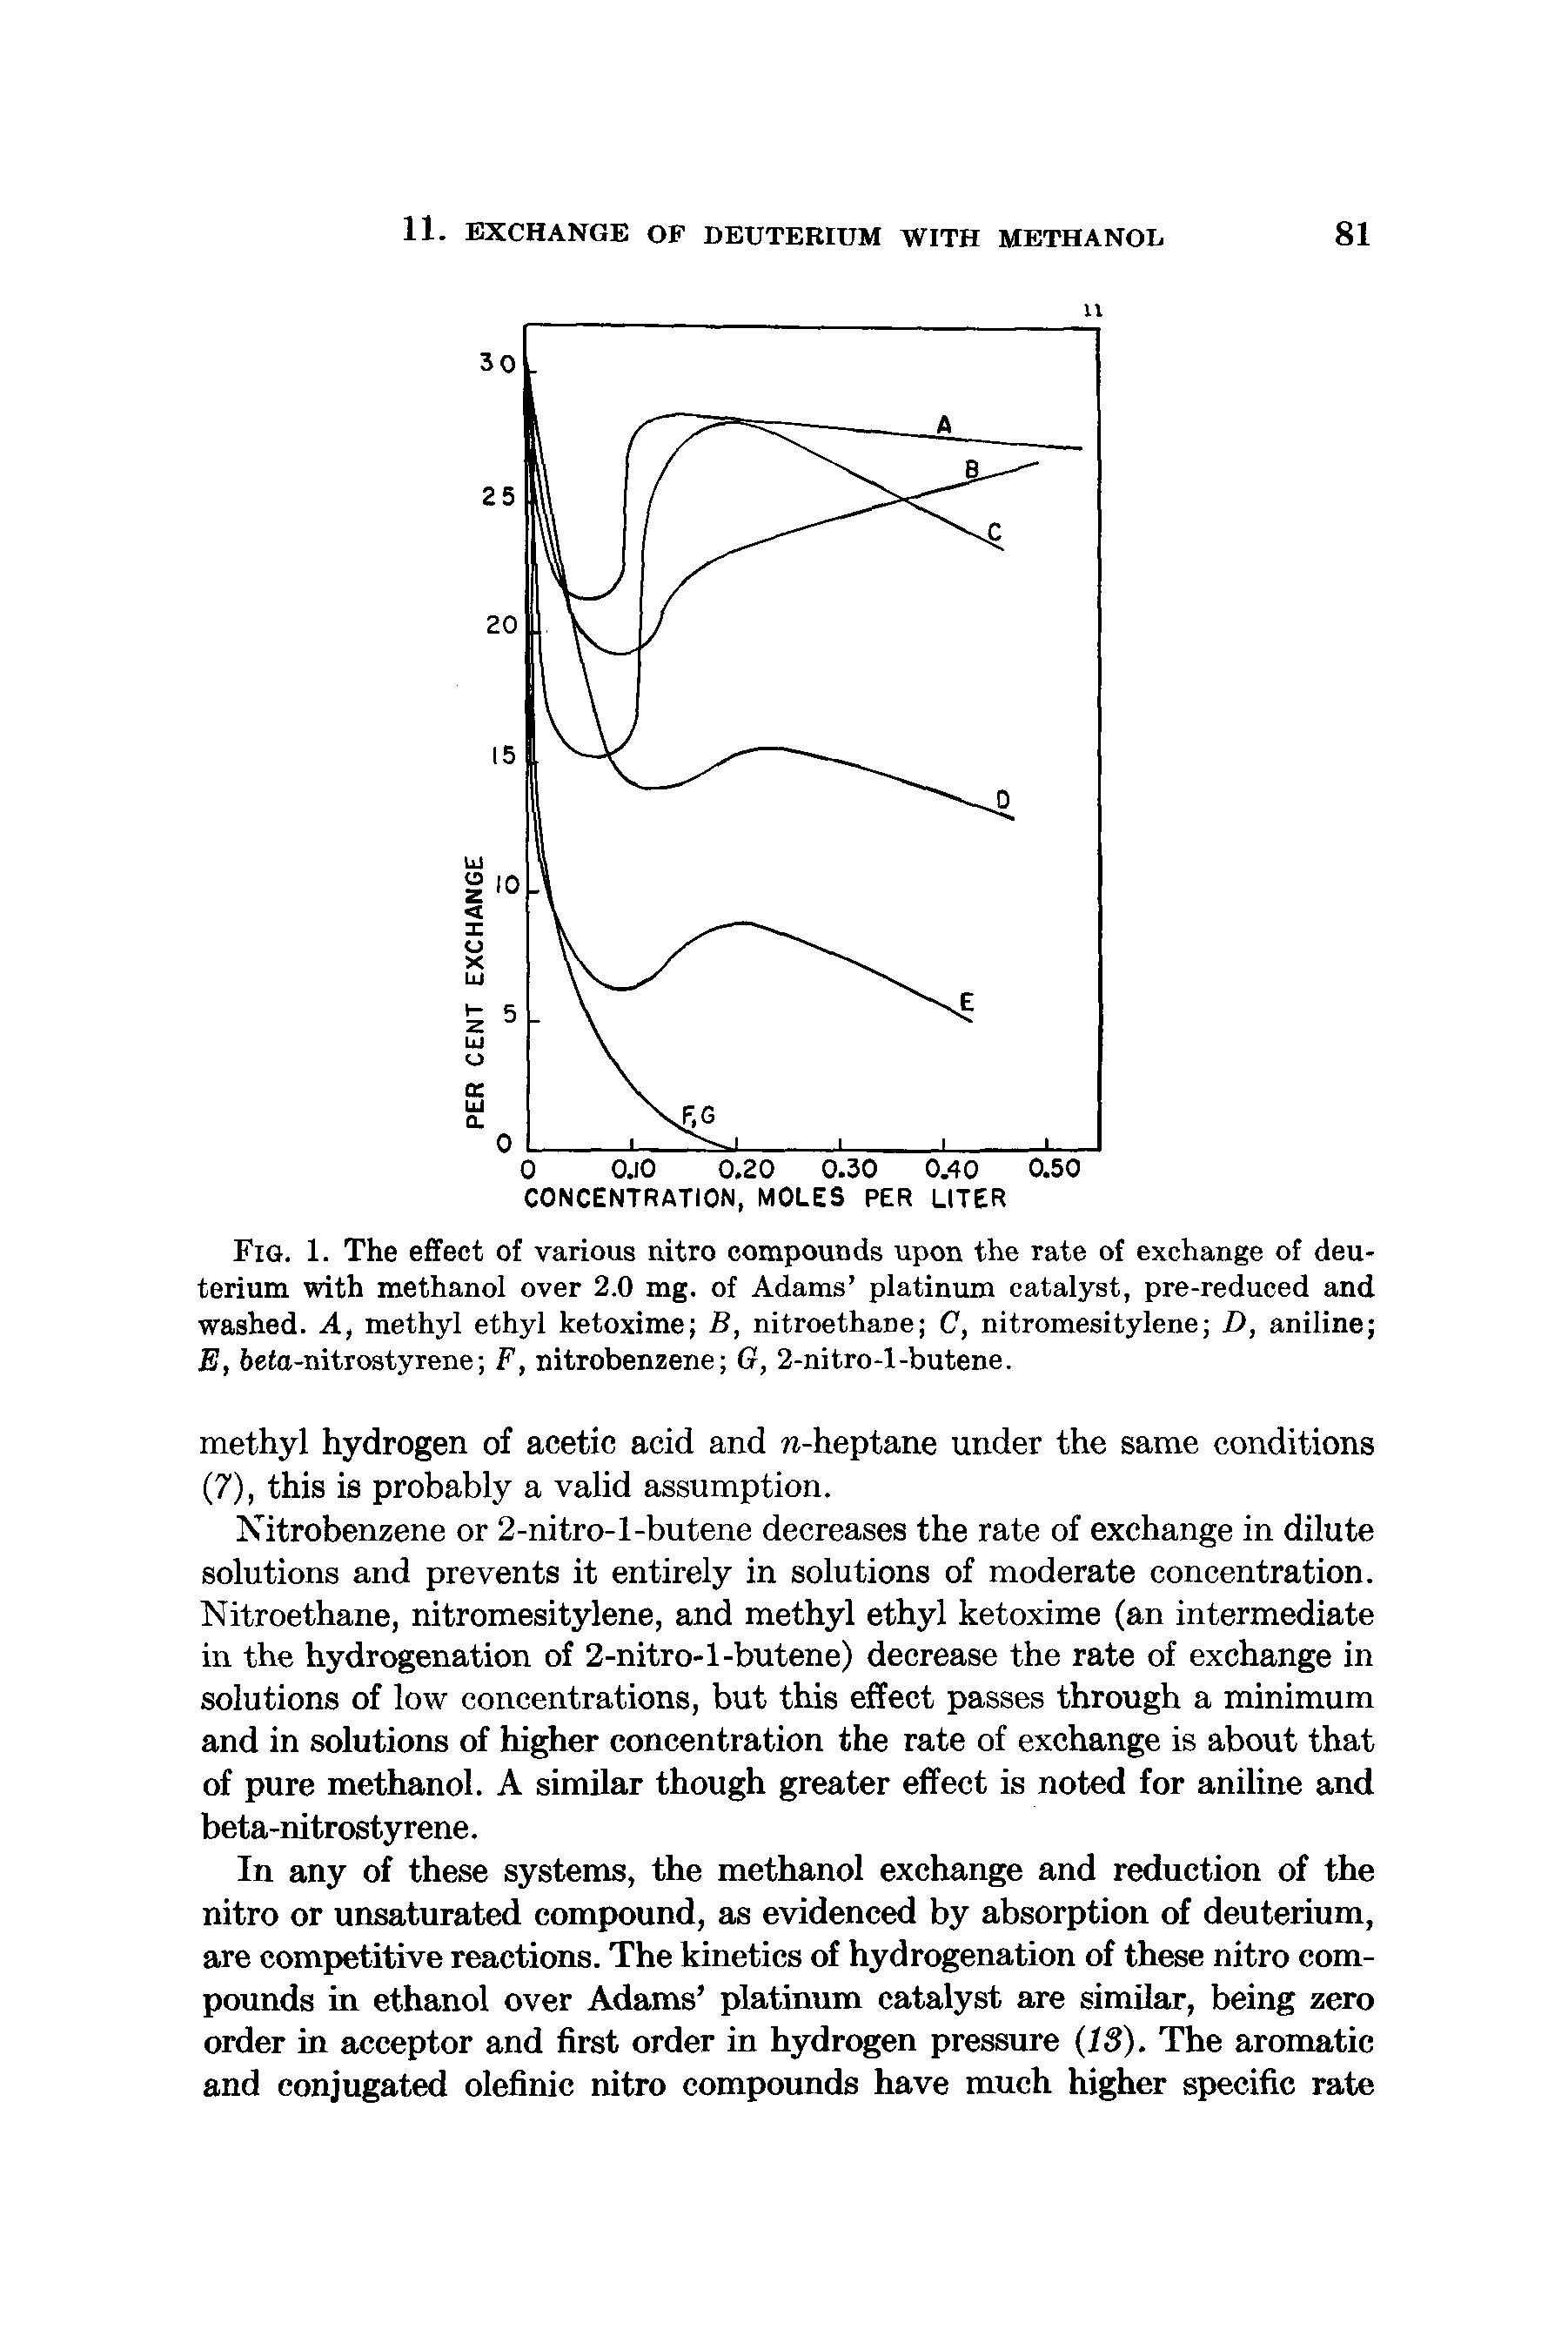 Fig. 1. The effect of various nitro compounds upon the rate of exchange of deuterium with methanol over 2.0 mg. of Adams platinum catalyst, pre-reduced and washed. A, methyl ethyl ketoxime B, nitroethane C, nitromesitylene D, aniline E, befa-nitrostyrene F, nitrobenzene G, 2-nitro-l-butene.